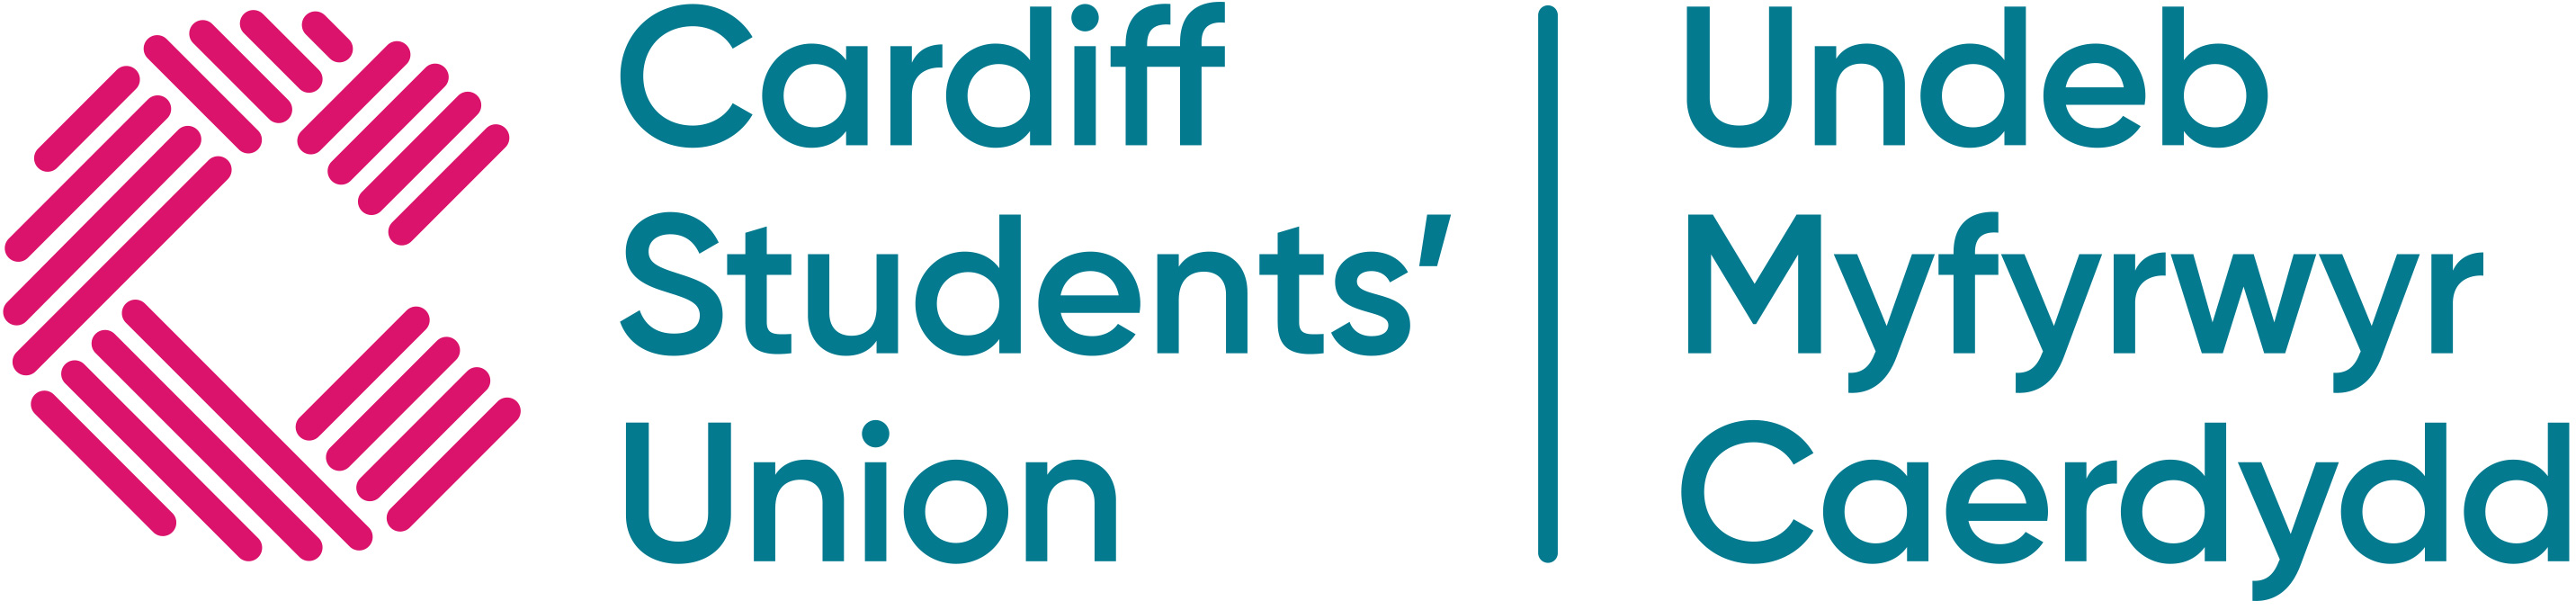 Cardiff Students' Union